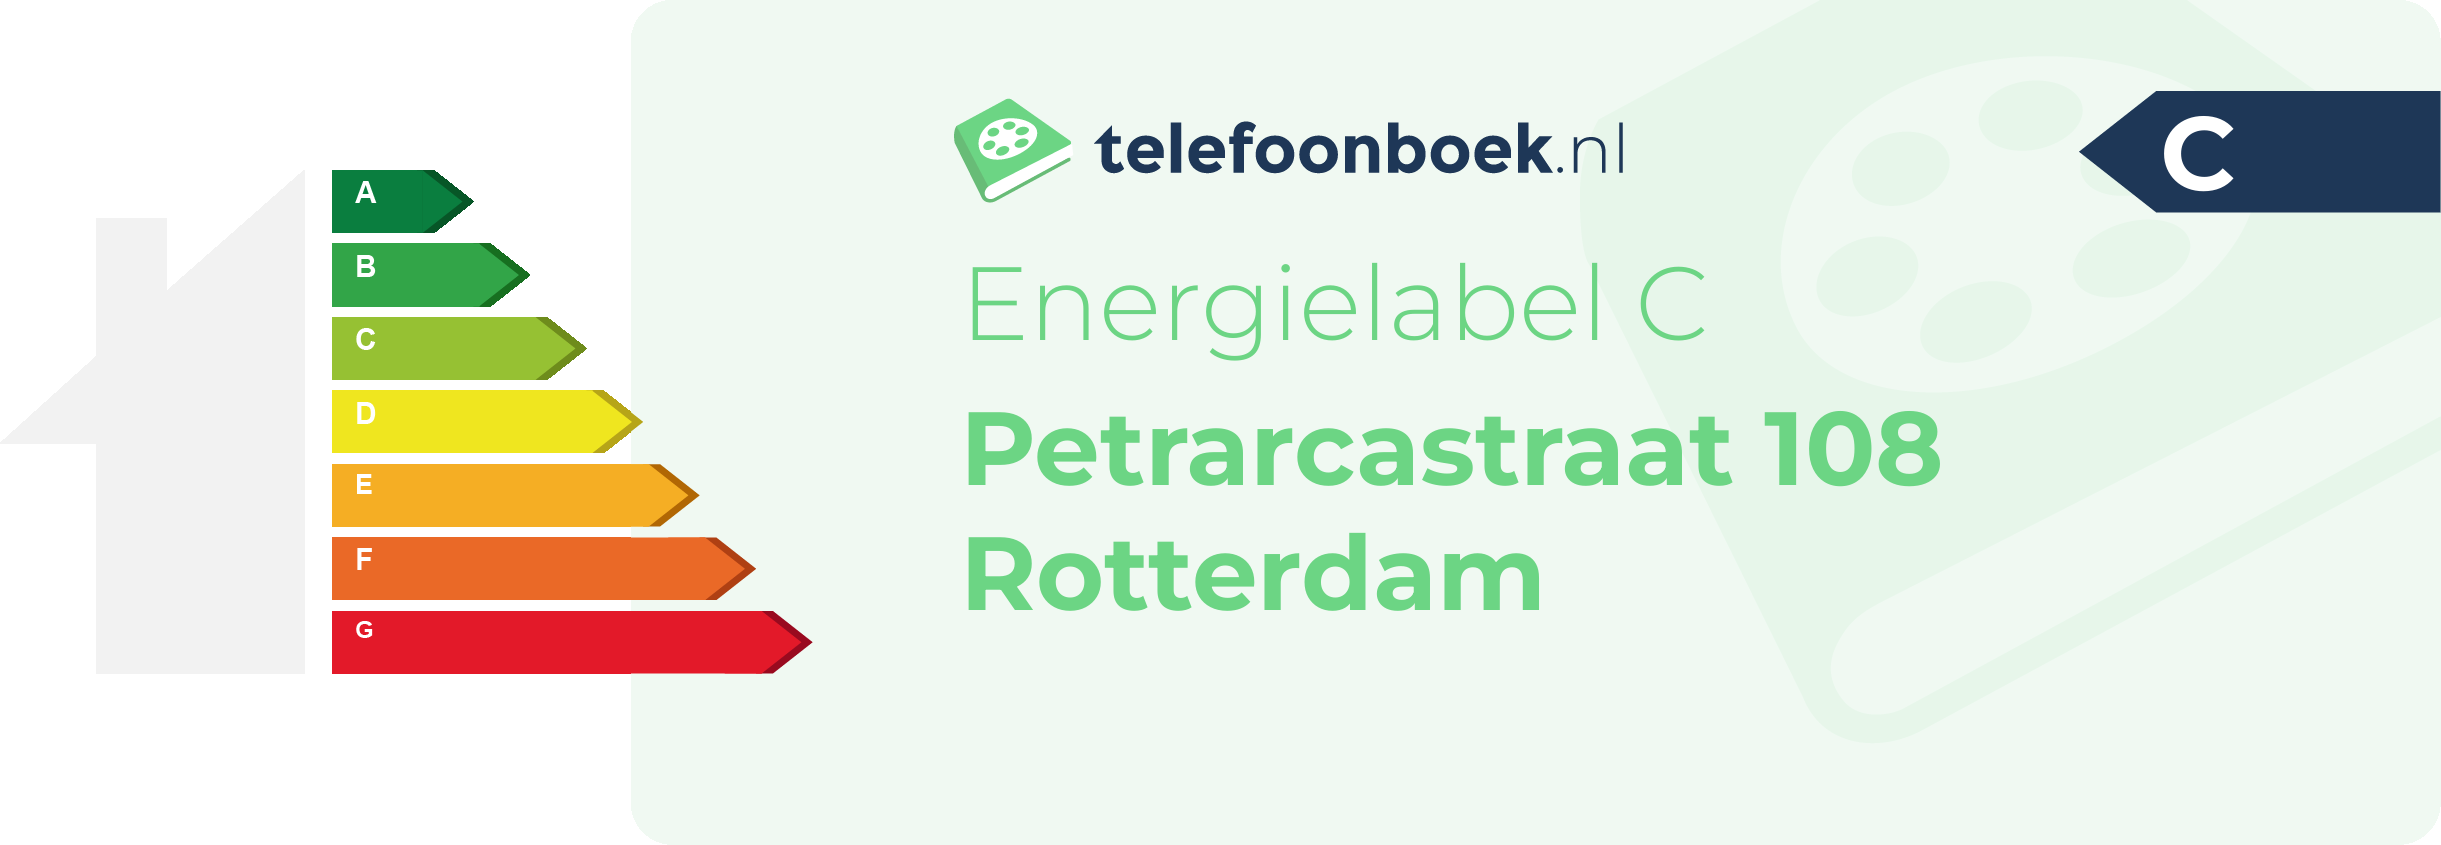 Energielabel Petrarcastraat 108 Rotterdam